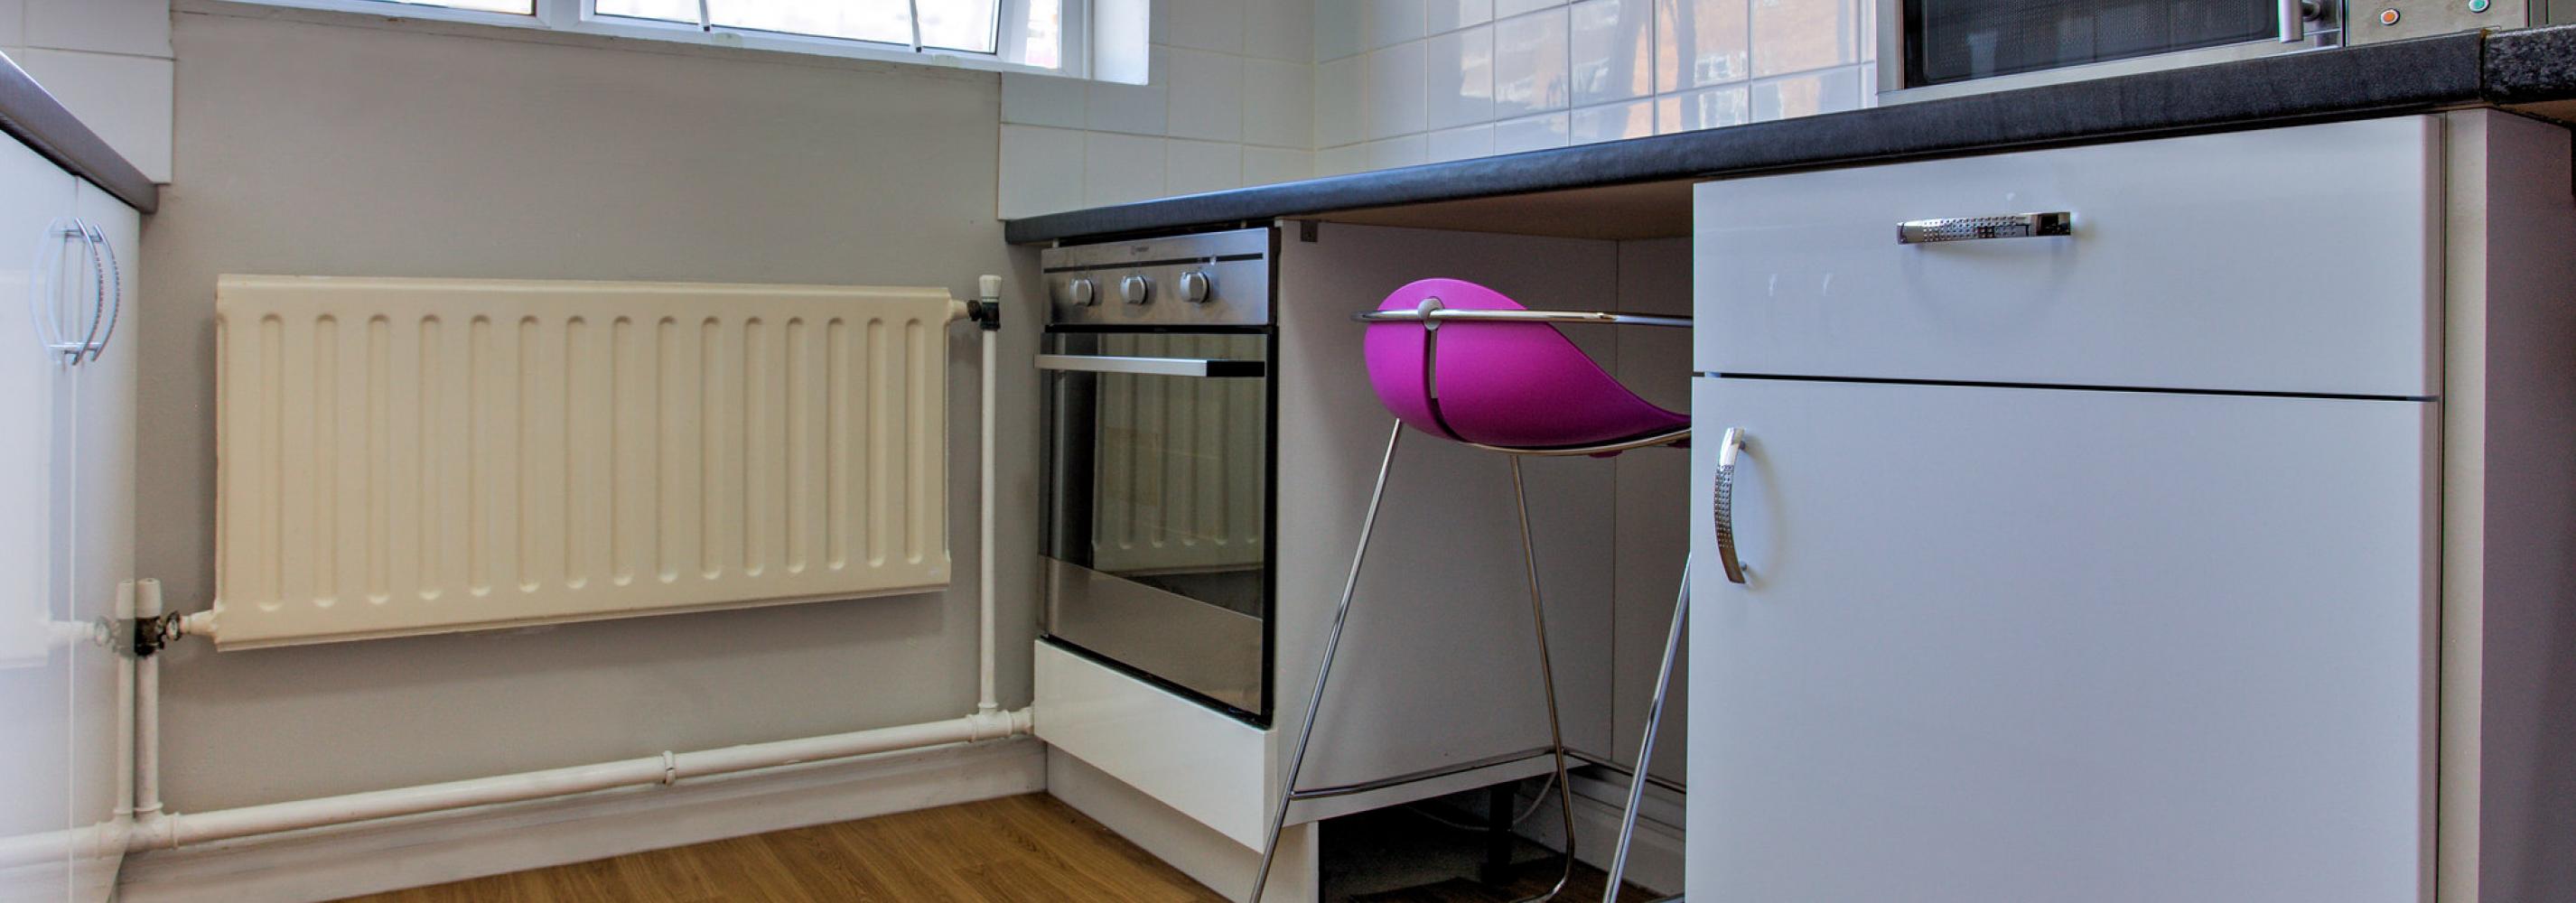 Self-catered studio kitchen 